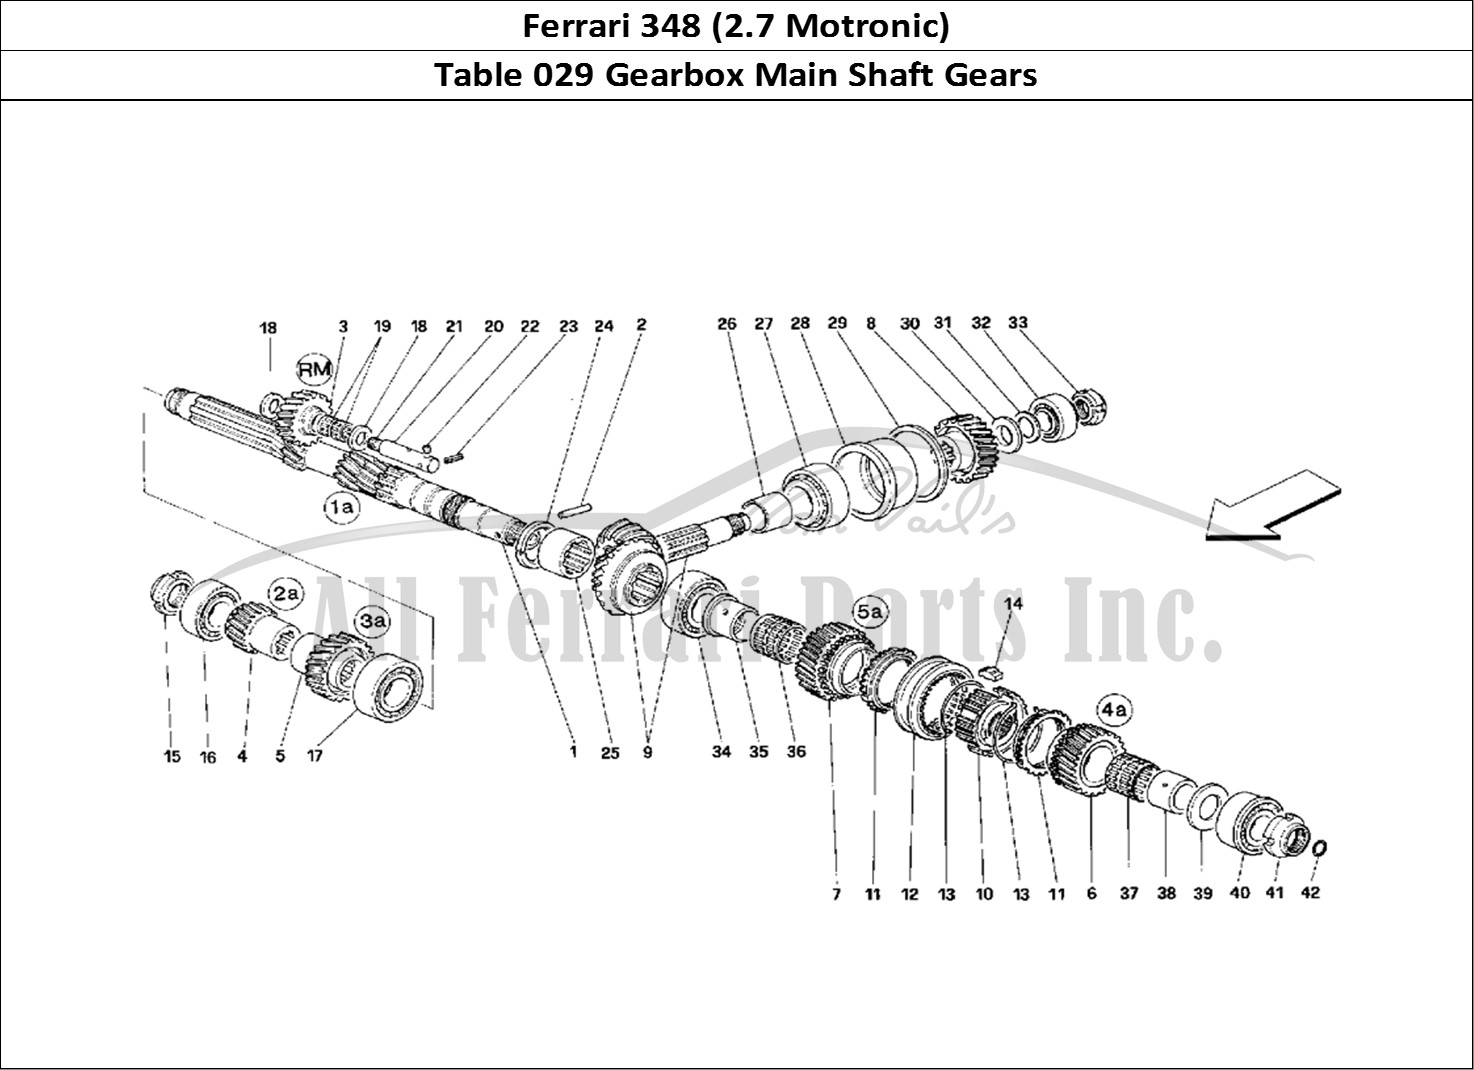 Ferrari Parts Ferrari 348 (2.7 Motronic) Page 029 Main Shaft Gears